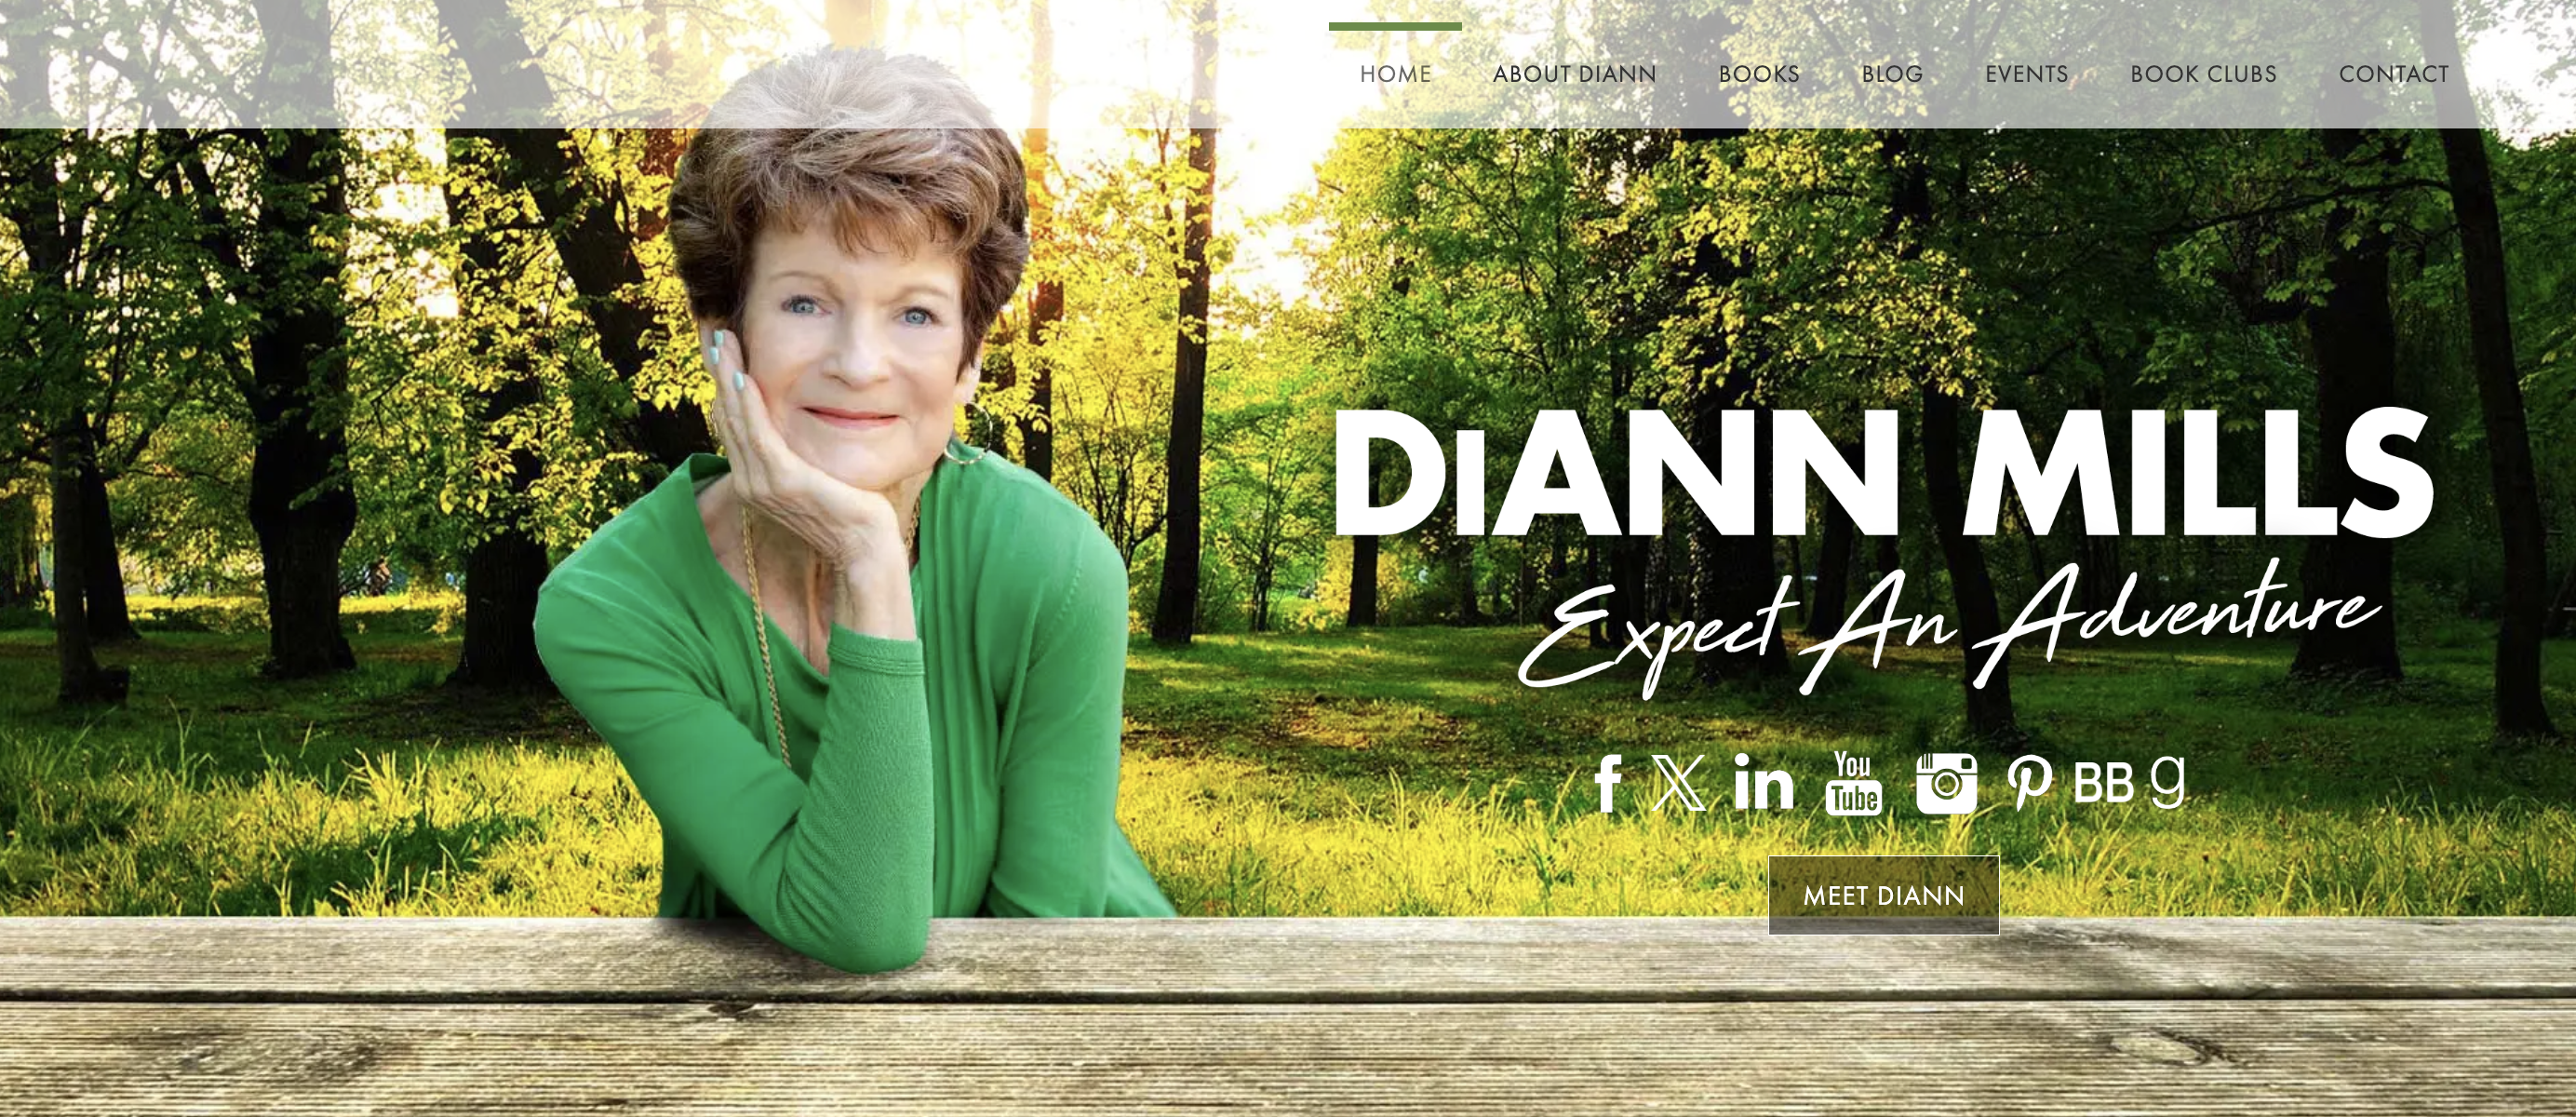 DiAnn Mills' author website